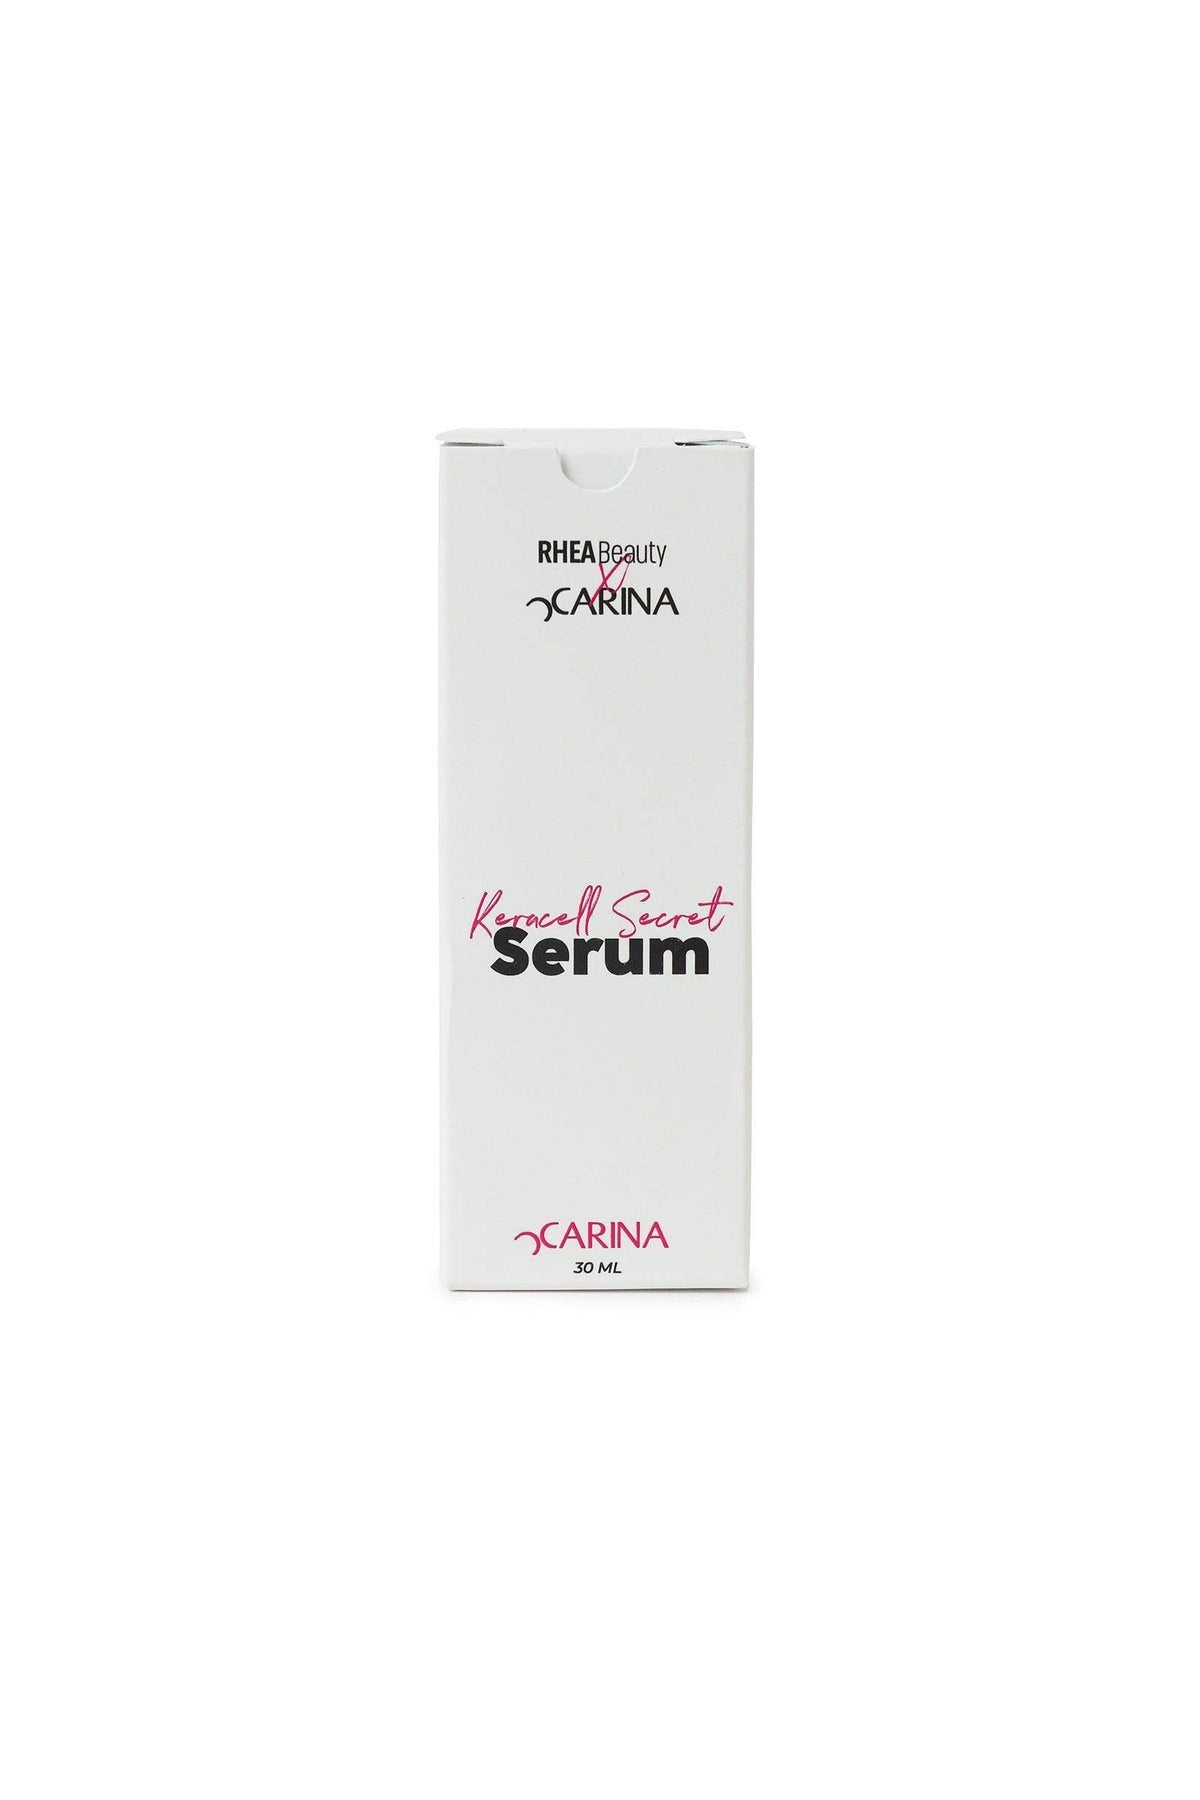 Keracell Secret Serum - 30ml - Carina - كارينا